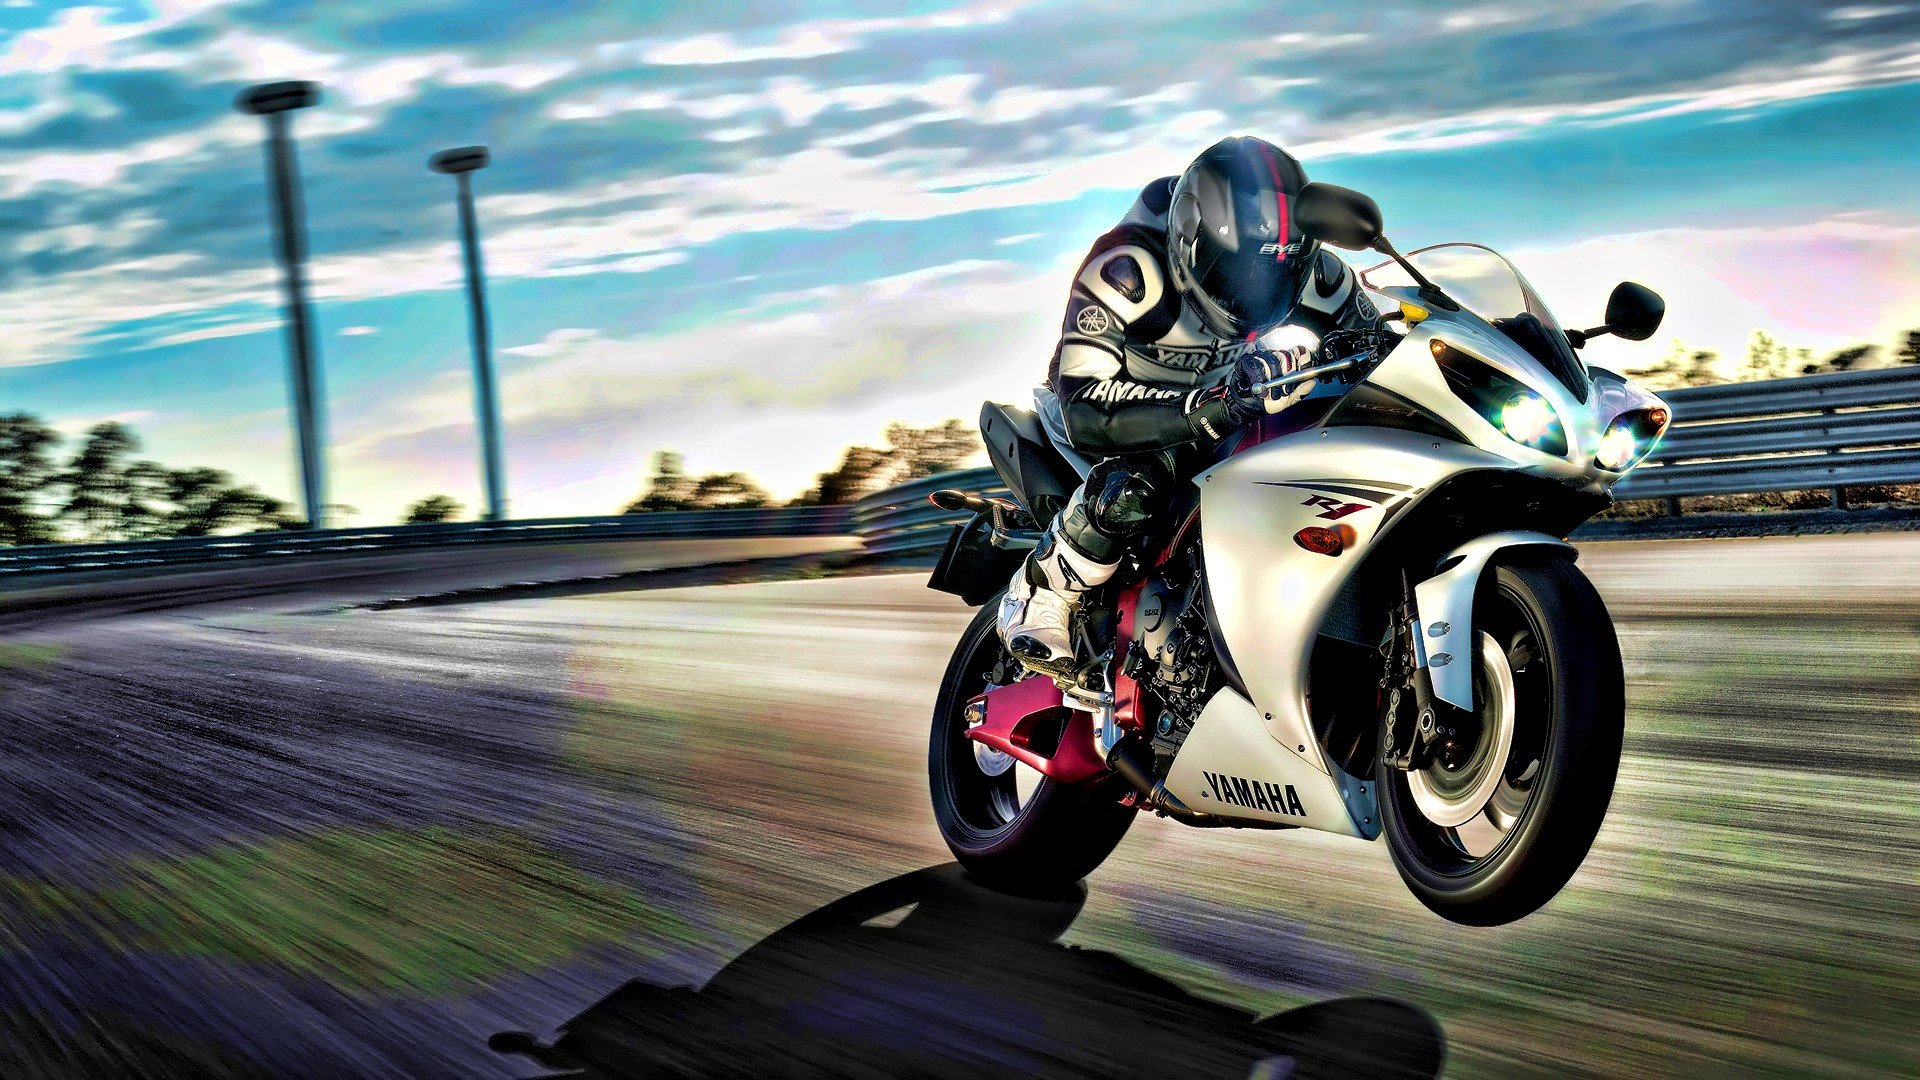 moto wallpapers,motorcycle racer,motorcycle,superbike racing,motorcycling,vehicle